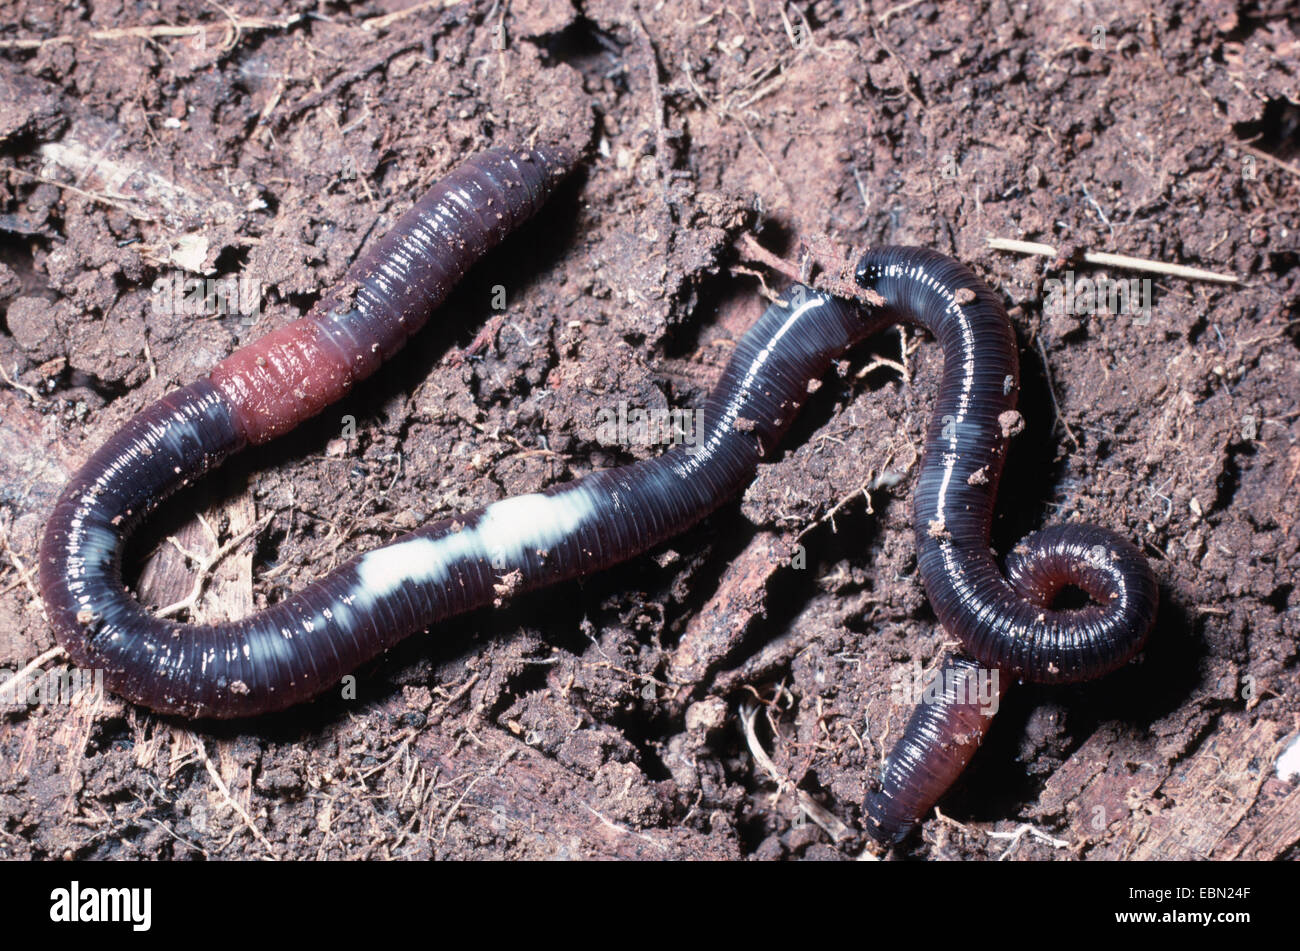 giant Gippsland earthworm, karmai (Megascolides australis), on soil ground  with recognisable white defensive liquid, Australia, Queensland Stock Photo  - Alamy